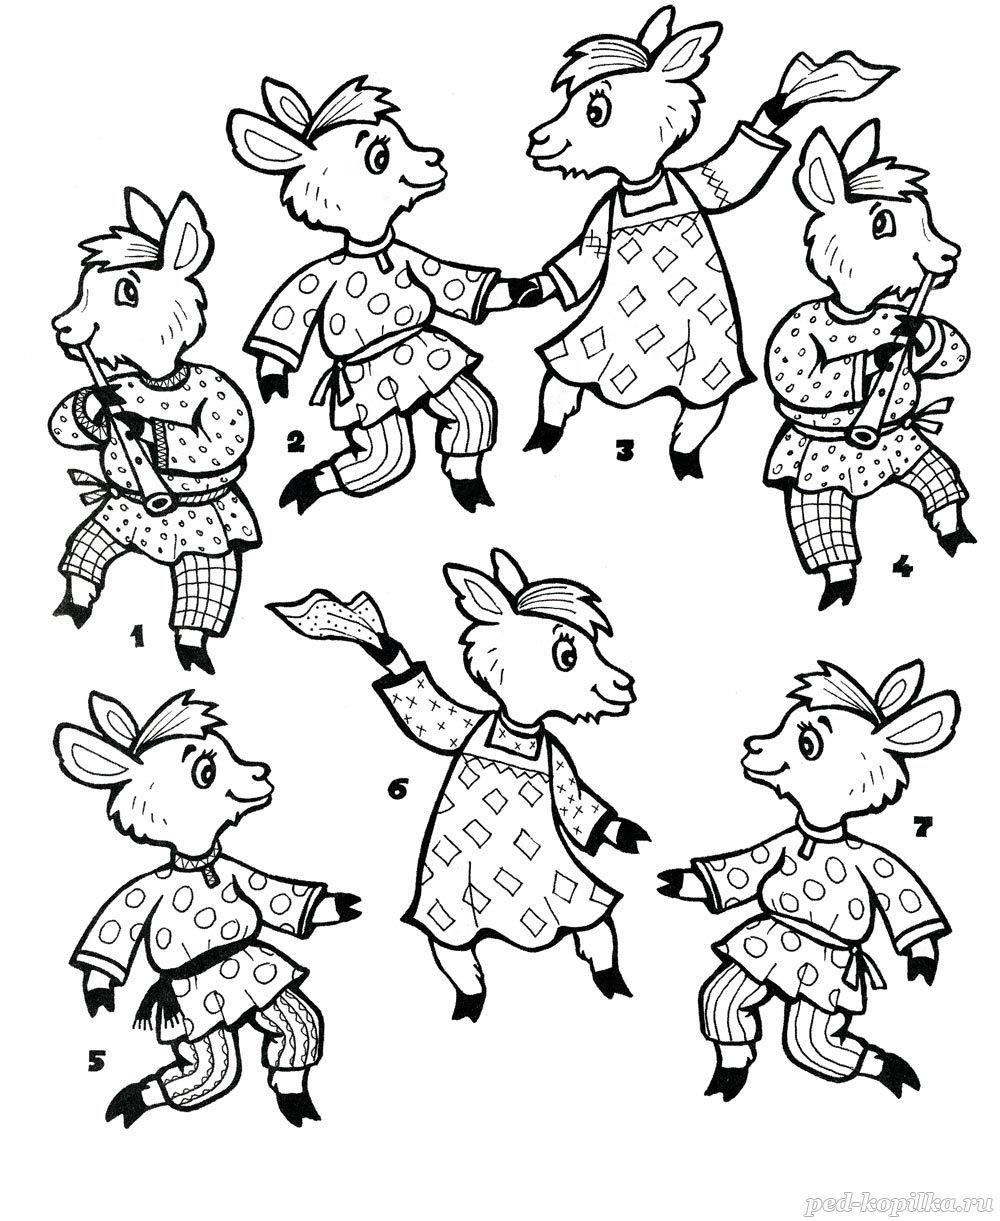 Розмальовки розмальовки до казки семеро козенят мкозлята танцюють, казка розфарбування вовк і семеро козенят